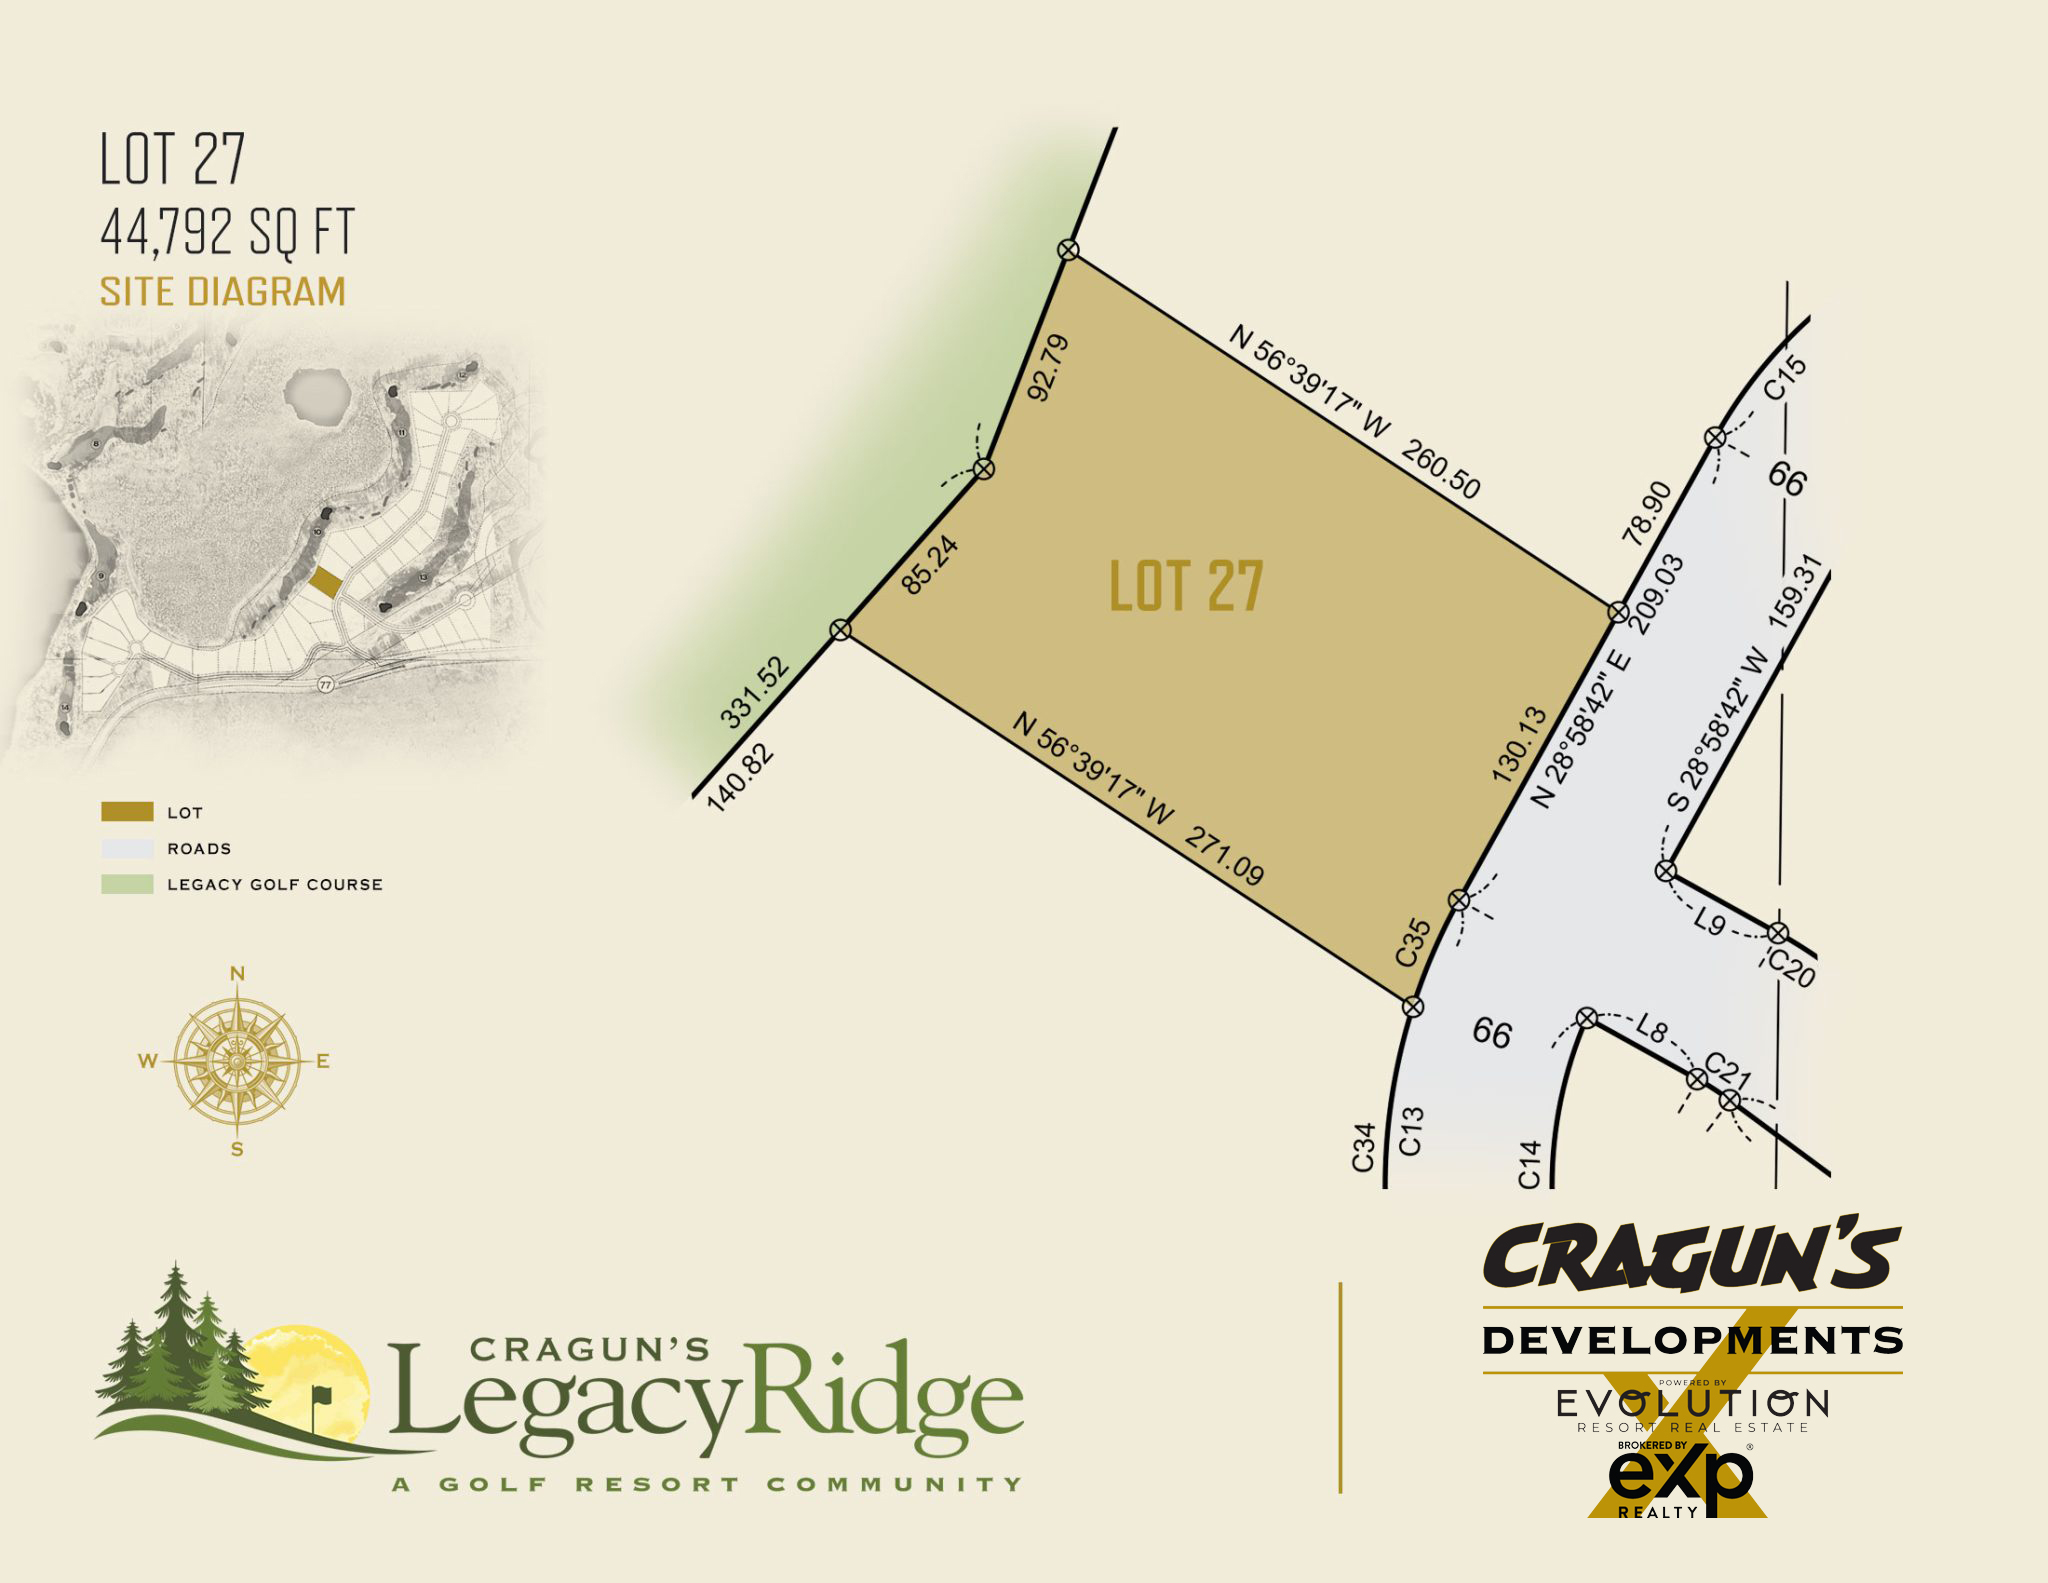 Legacy Ridge Lot 27 at Cragun's Developments in Brainerd, MN